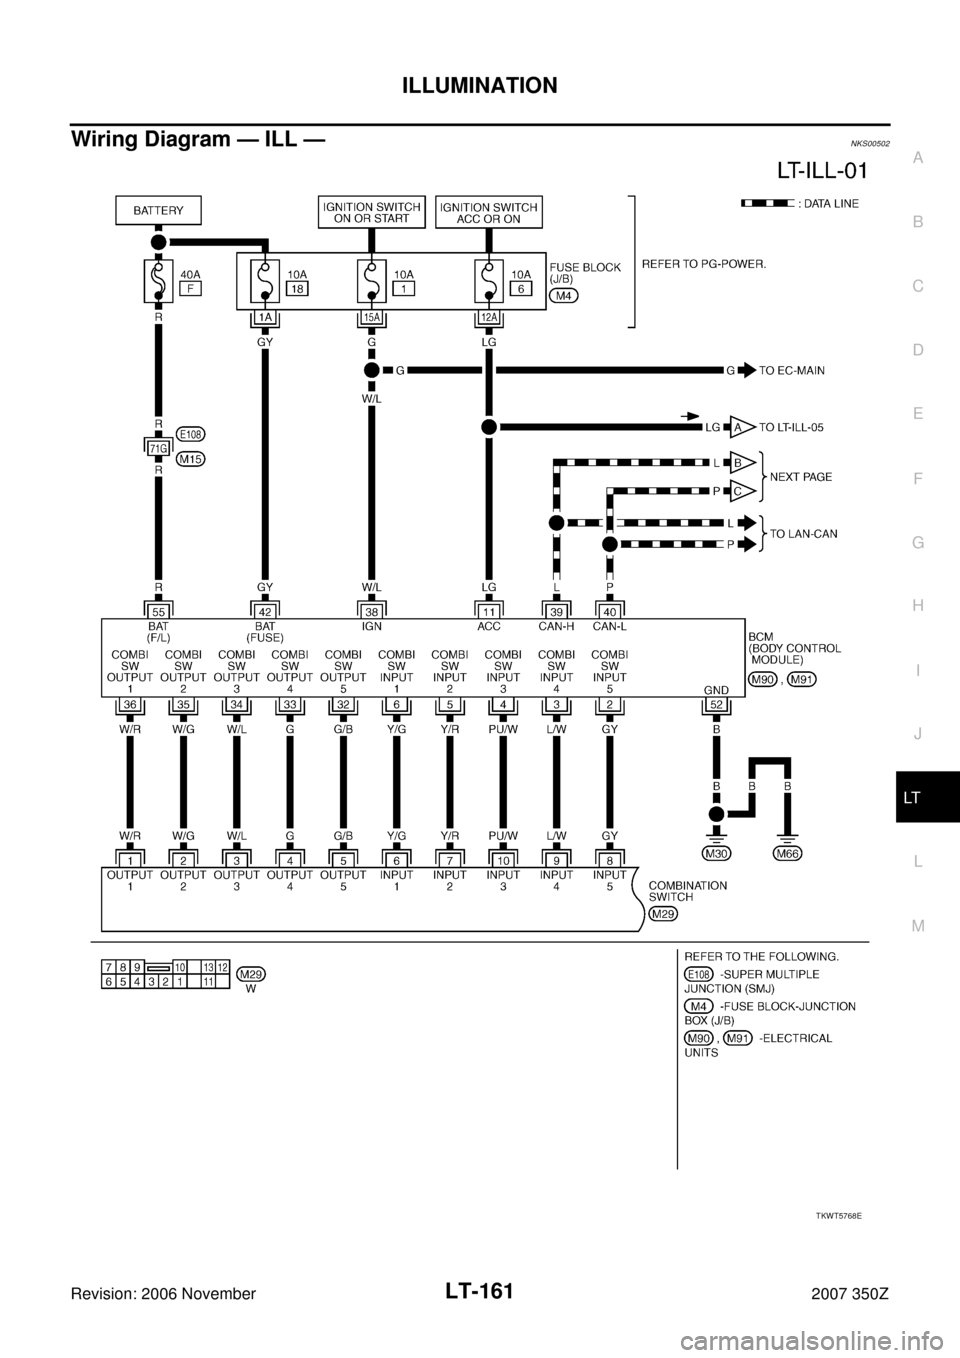 NISSAN 350Z 2007 Z33 Lighting System Workshop Manual ILLUMINATION
LT-161
C
D
E
F
G
H
I
J
L
MA
B
LT
Revision: 2006 November2007 350Z
Wiring Diagram — ILL —NKS00502
TKWT5768E 